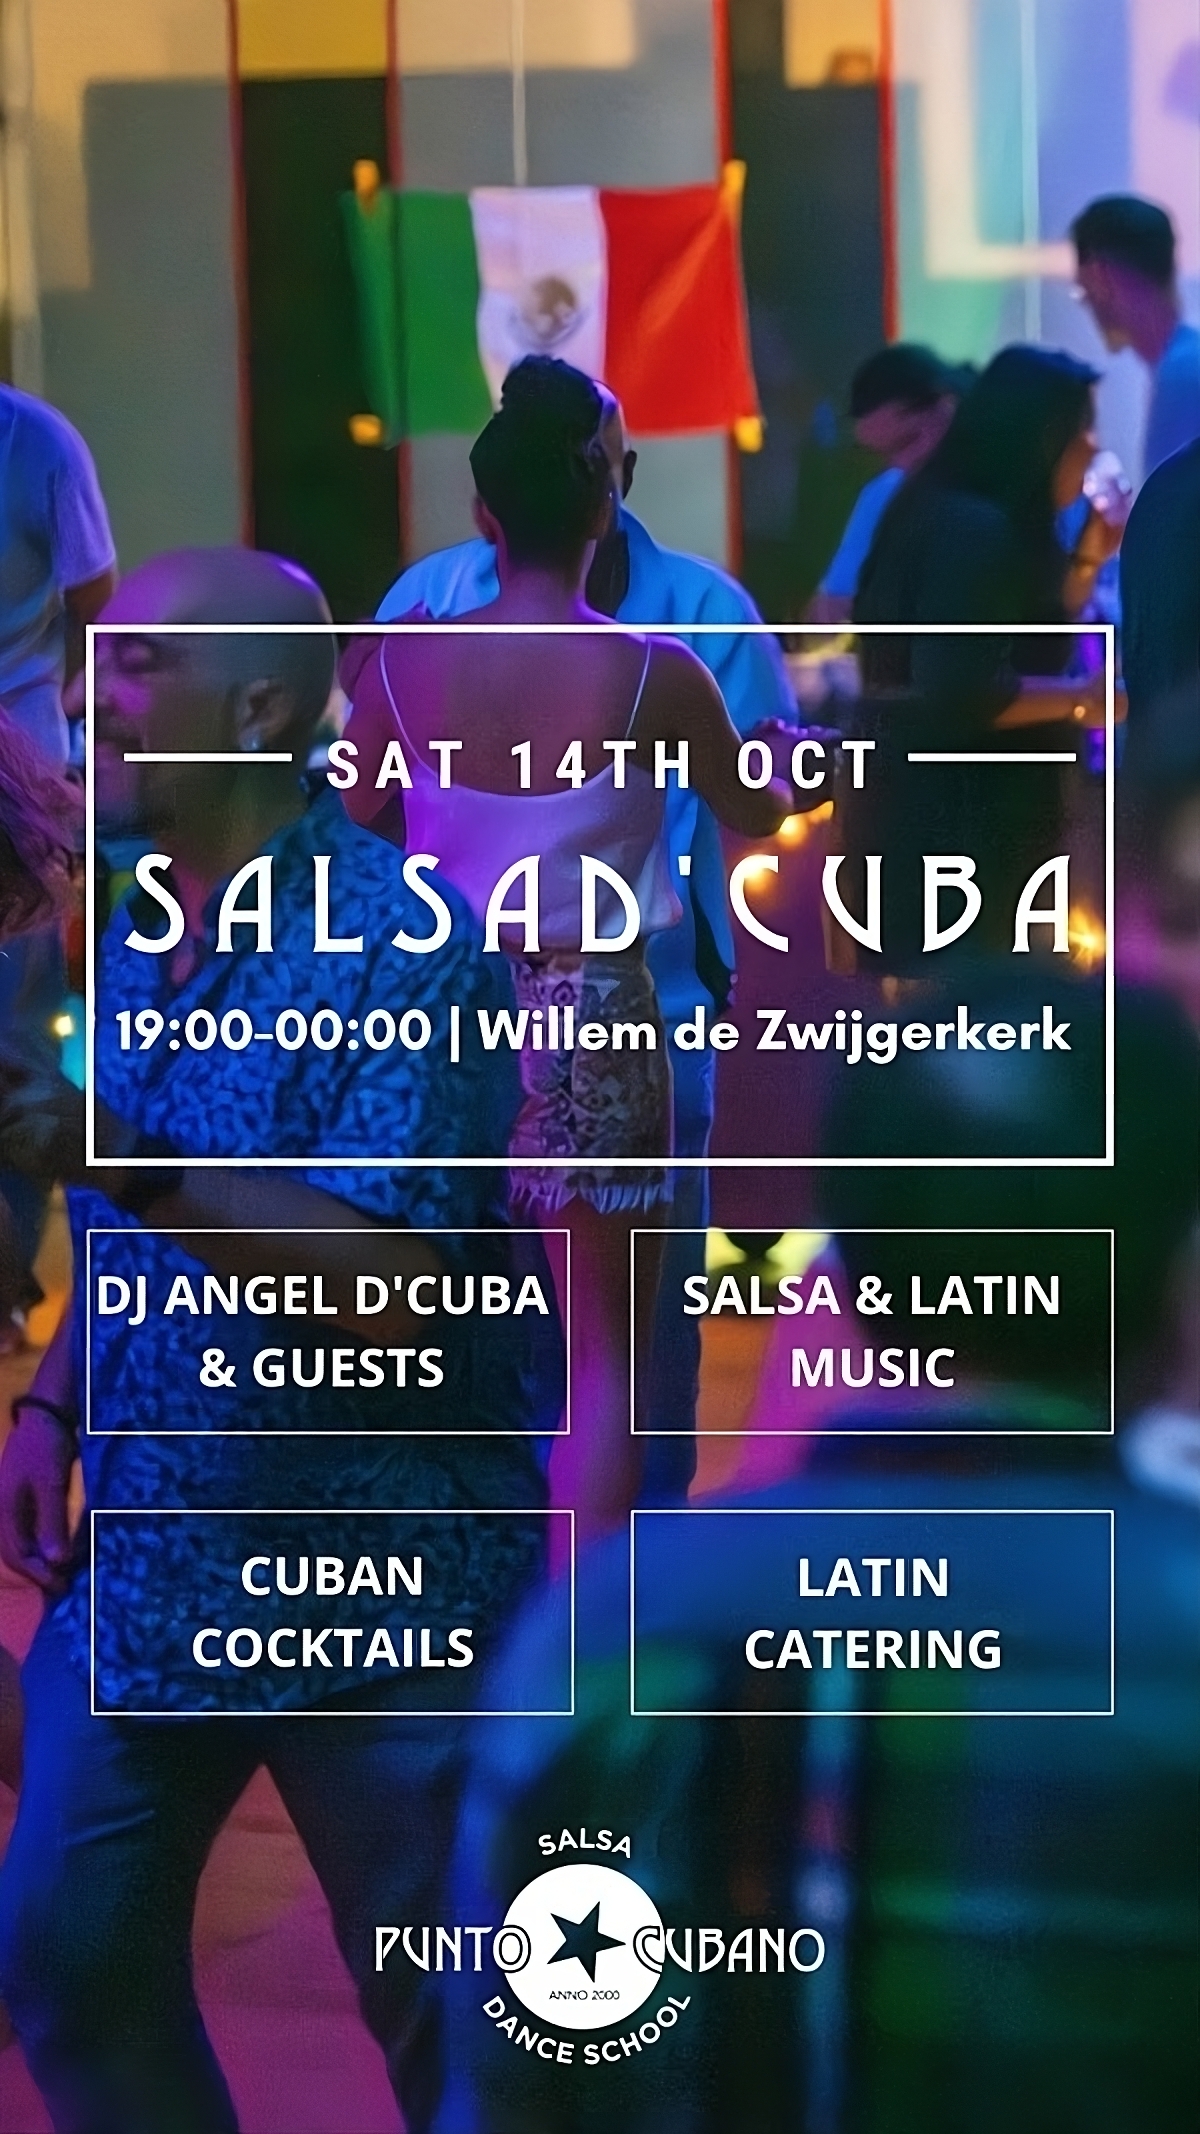 SalsaD'Cuba in Amsterdam